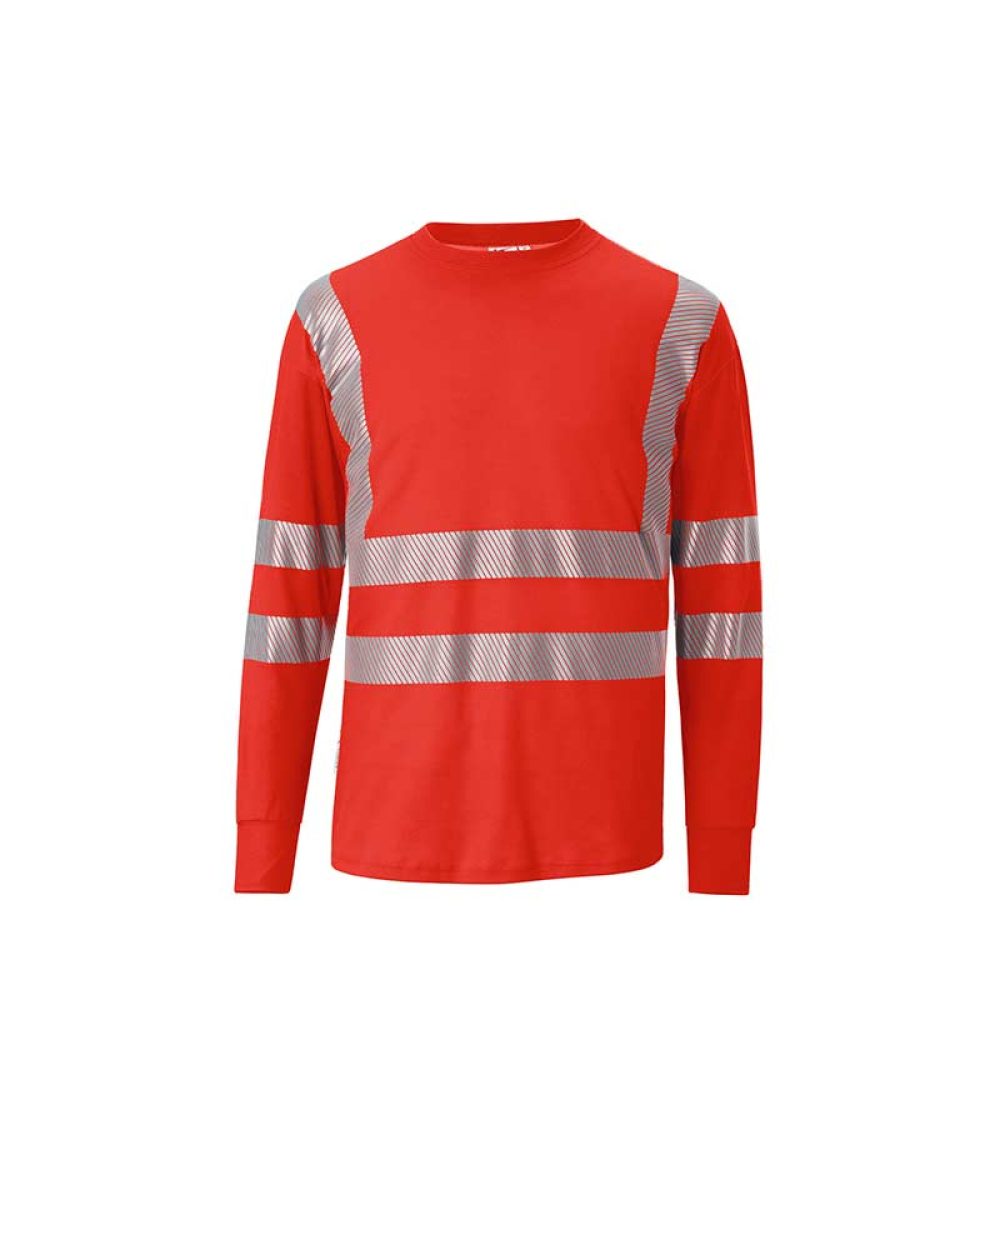 kuebler-warnschutz-sweatshirt-shirts-5045-8227-54